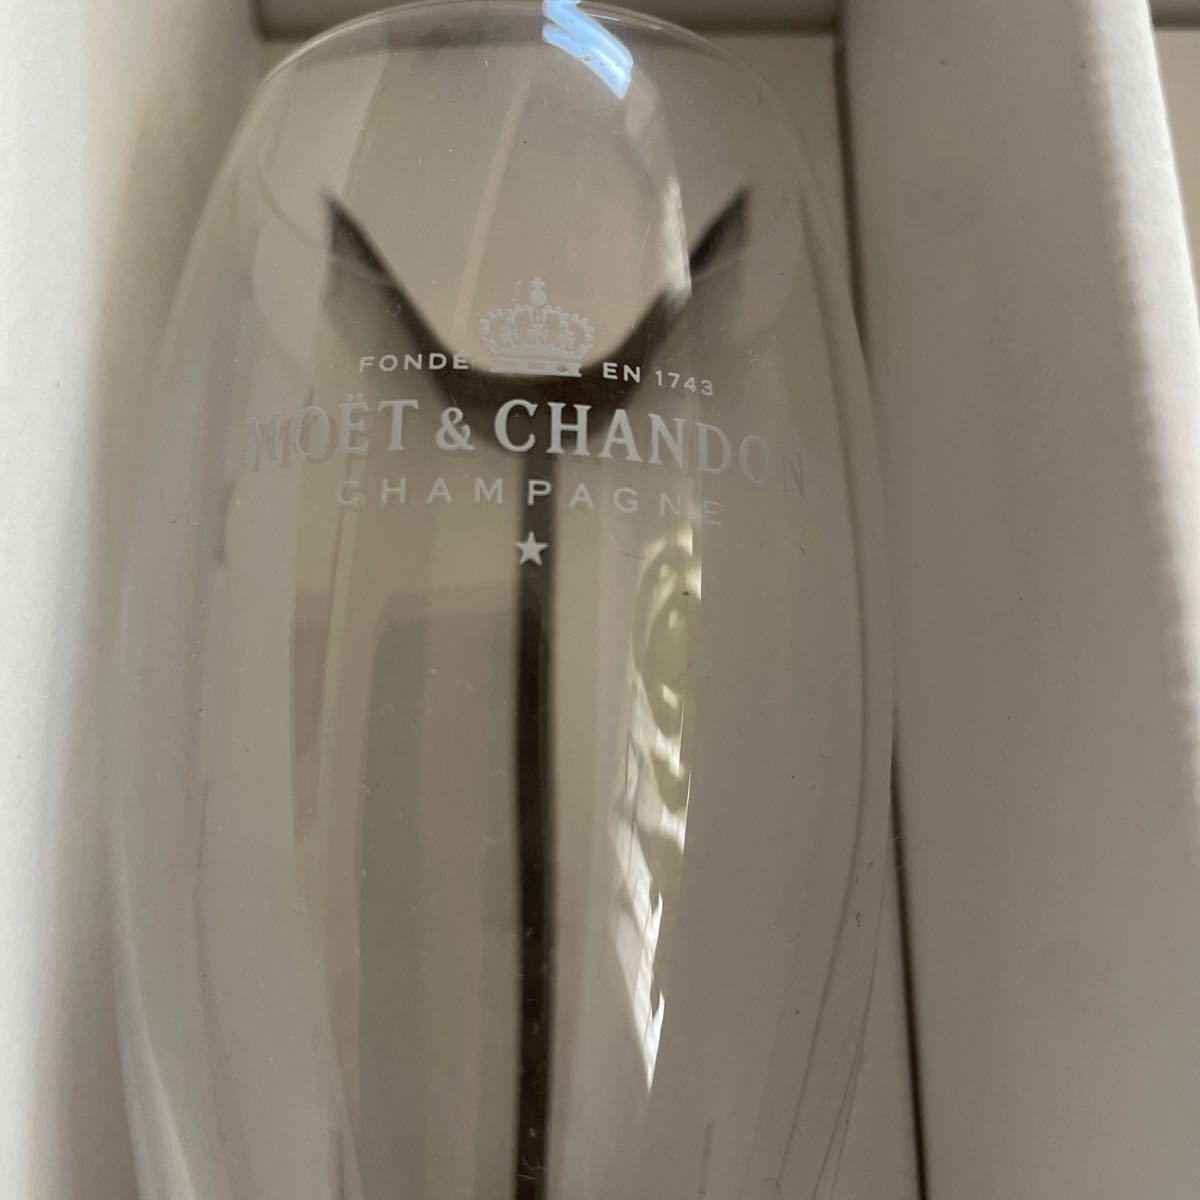 MOET&CHANDON Moet&Chandon ring holder champagne glass set moe car n Don champagne [ unused goods ]